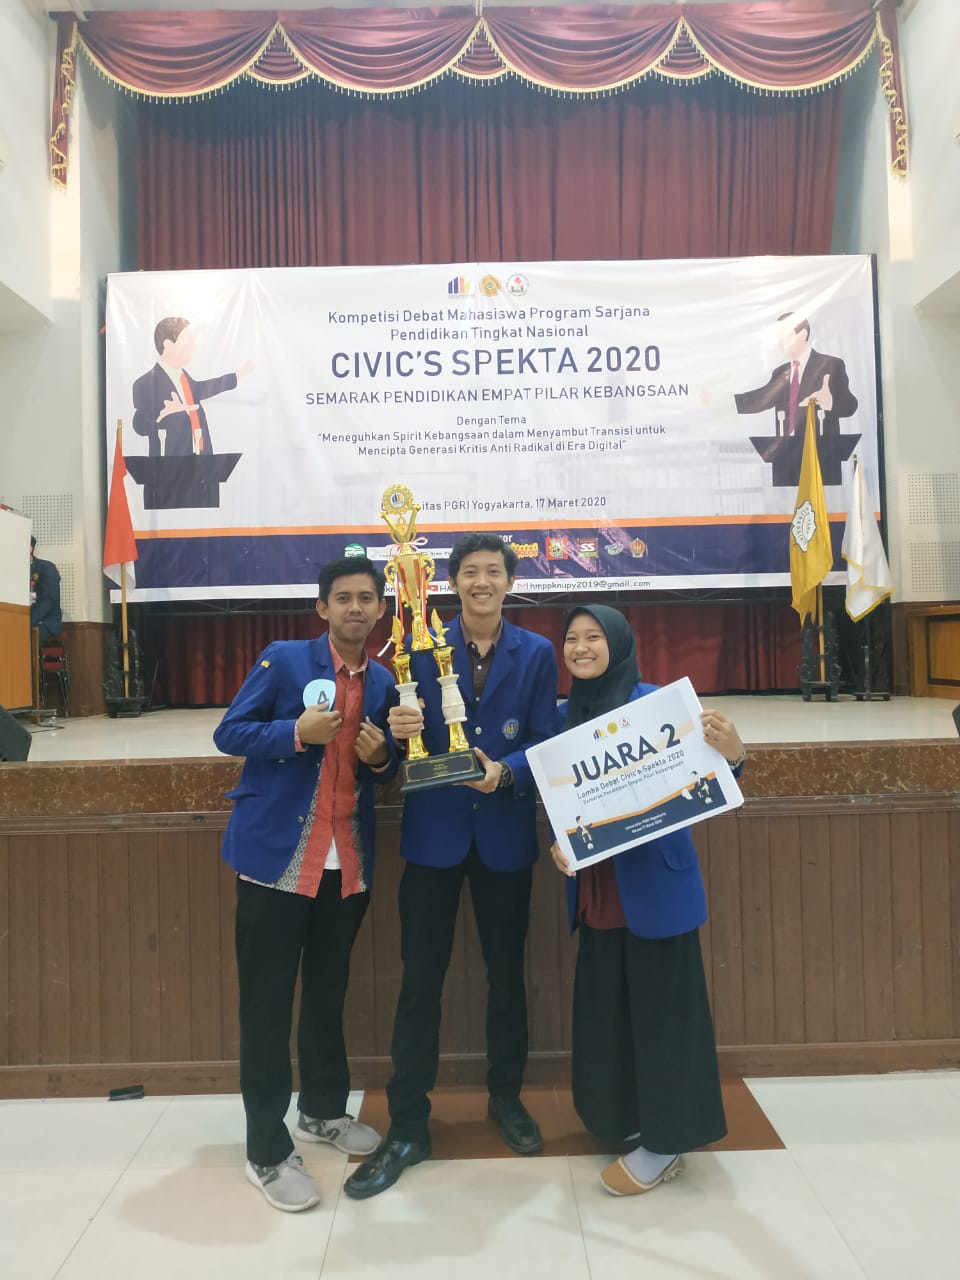 Foto Lomba Debat Nasional Civic's Spekta 2020 Universitas PGRI Yogyakarta